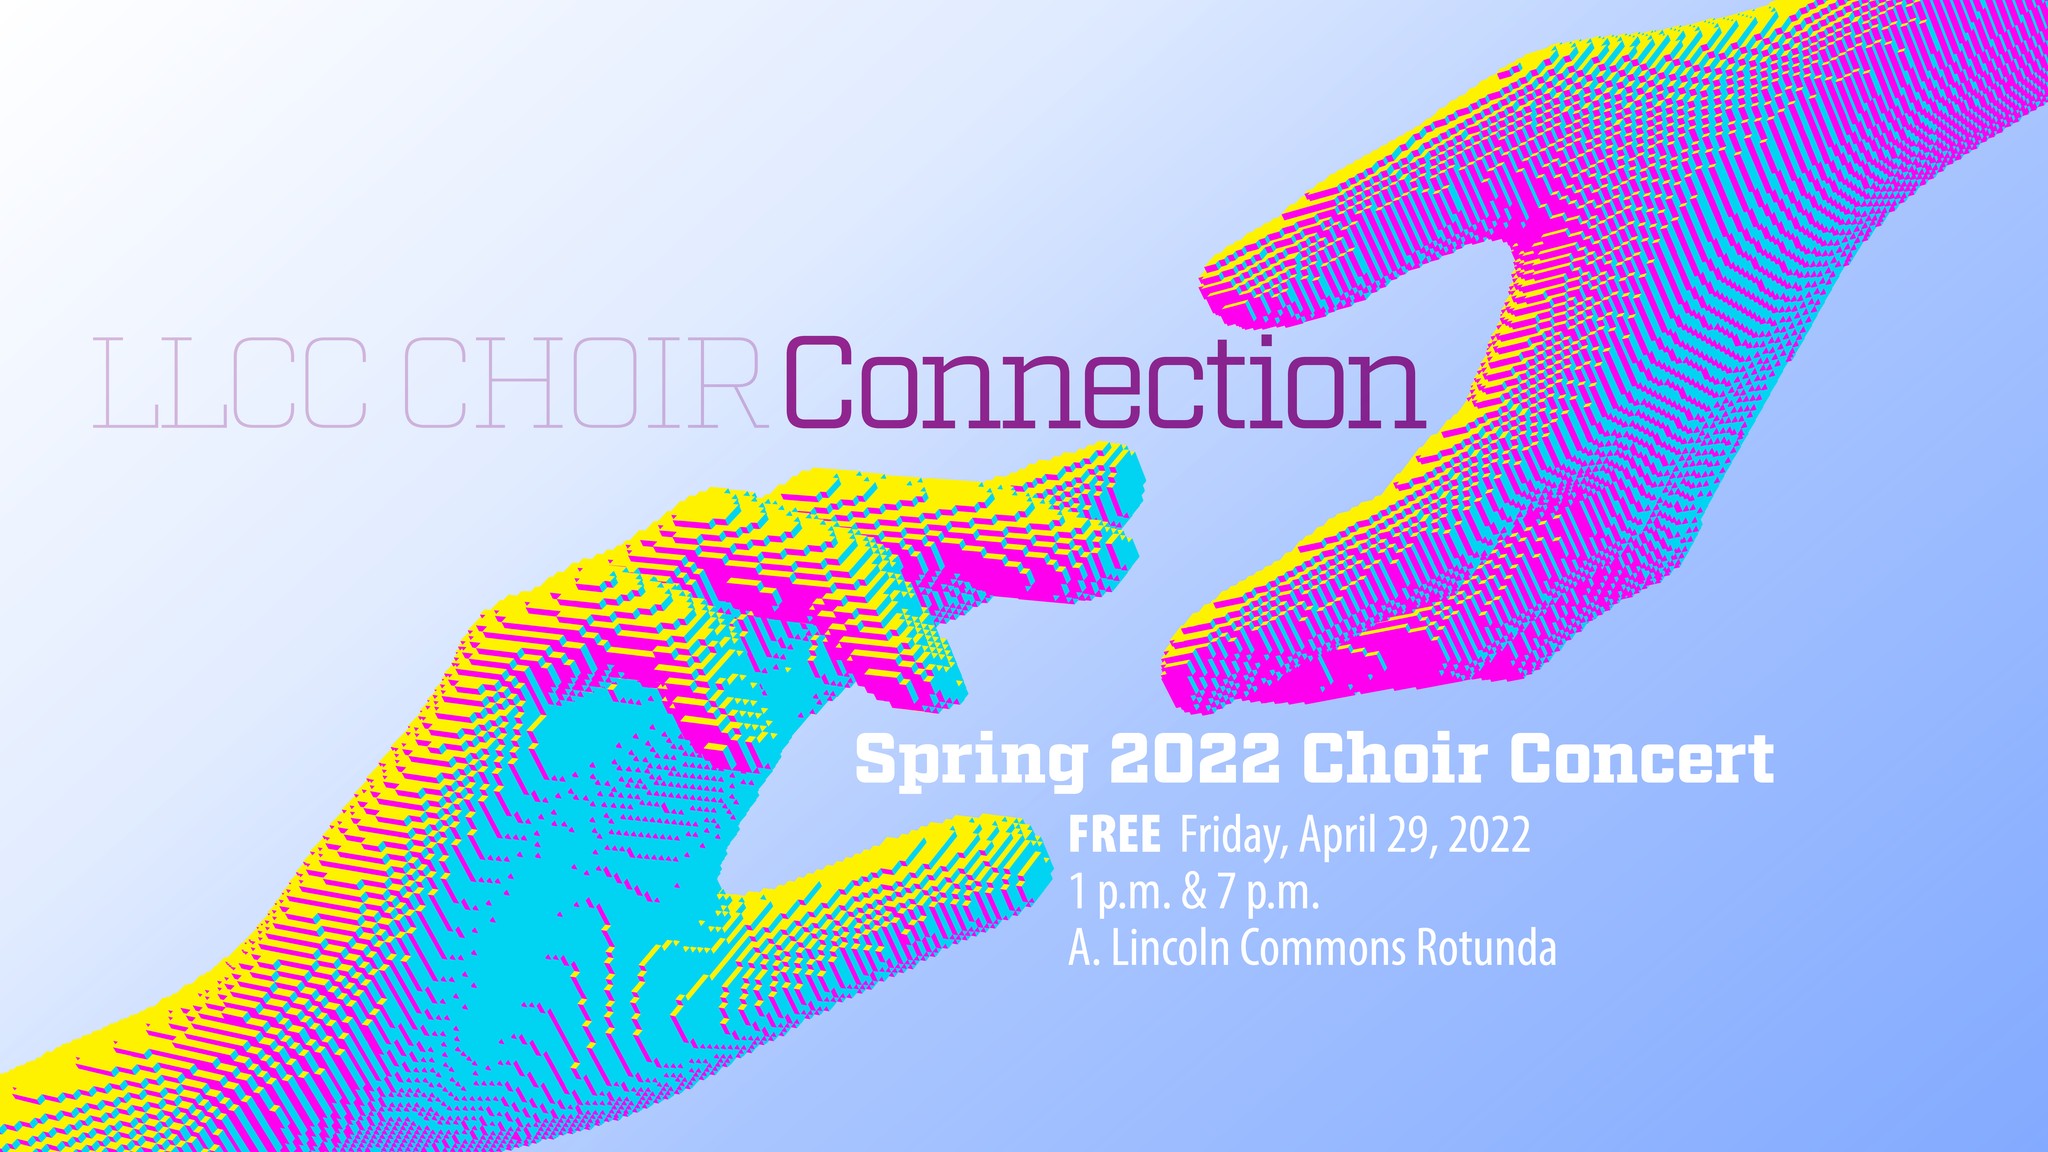 LLCC Choir Connection. Spring 2022 Choir Concert. FREE. Friday, April 29, 2022, 1 p.m. & 7 p.m. A. Lincoln Commons Rotunda